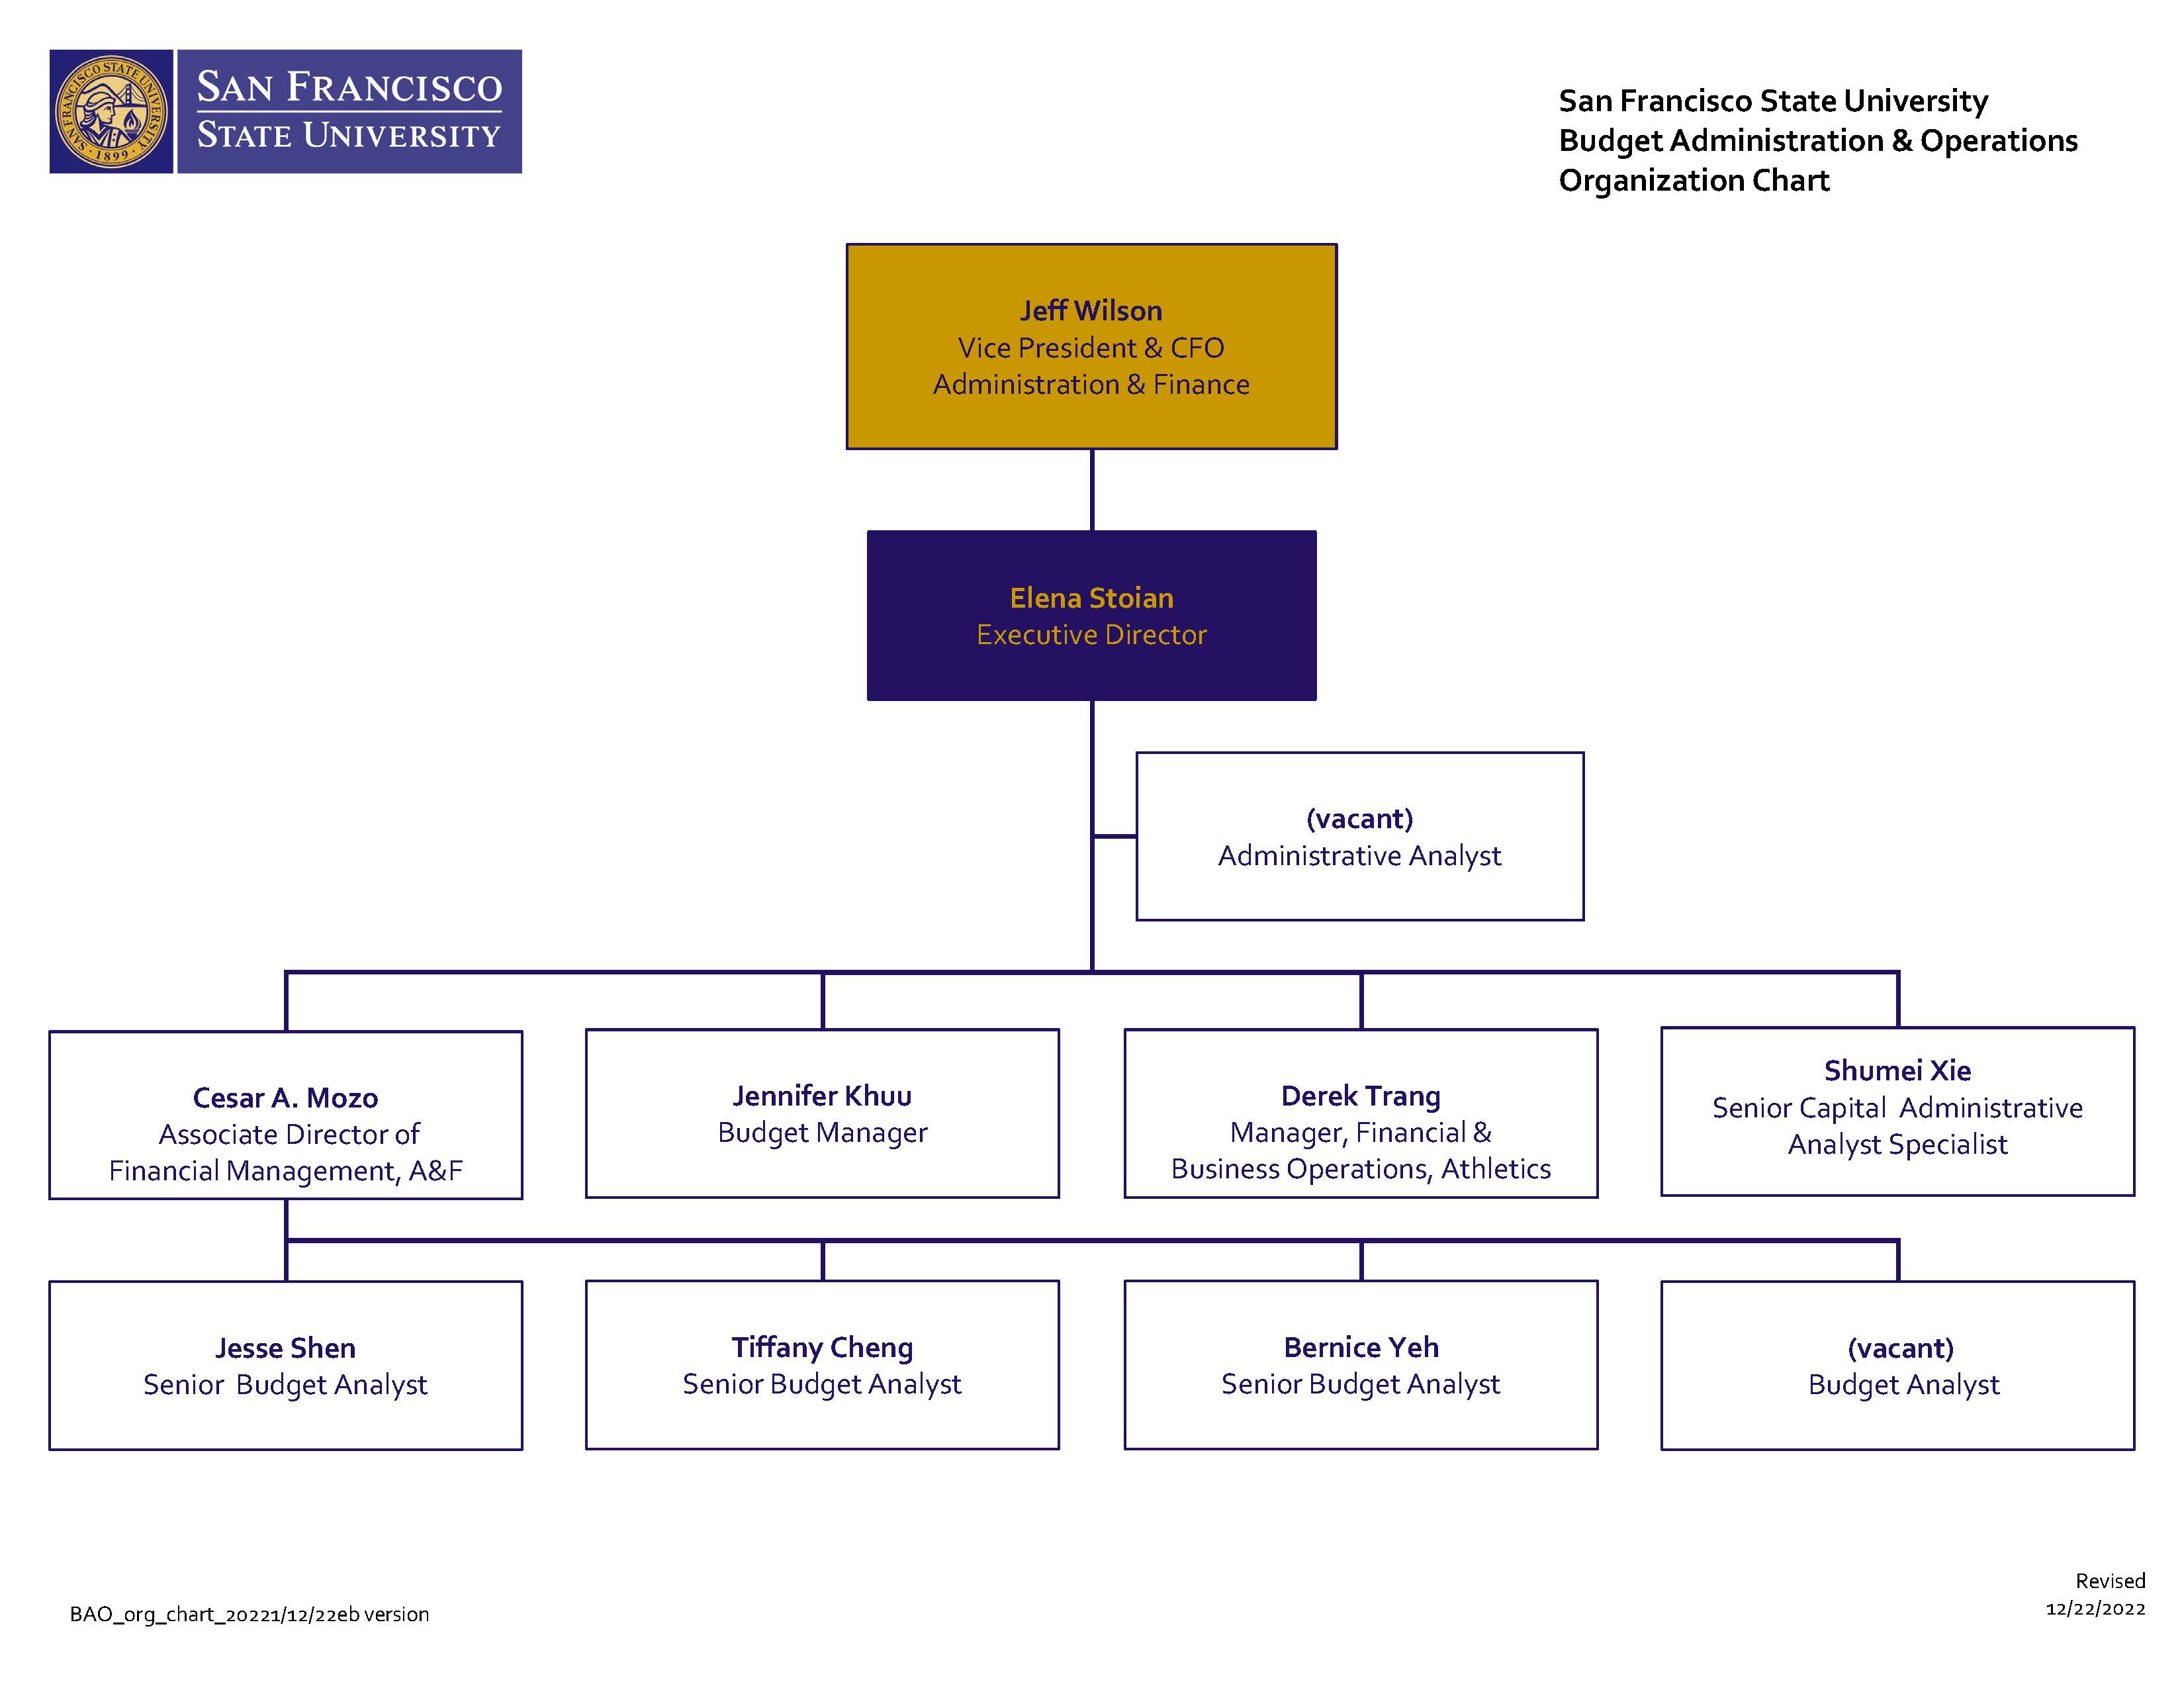 BAO Organizational Chart 